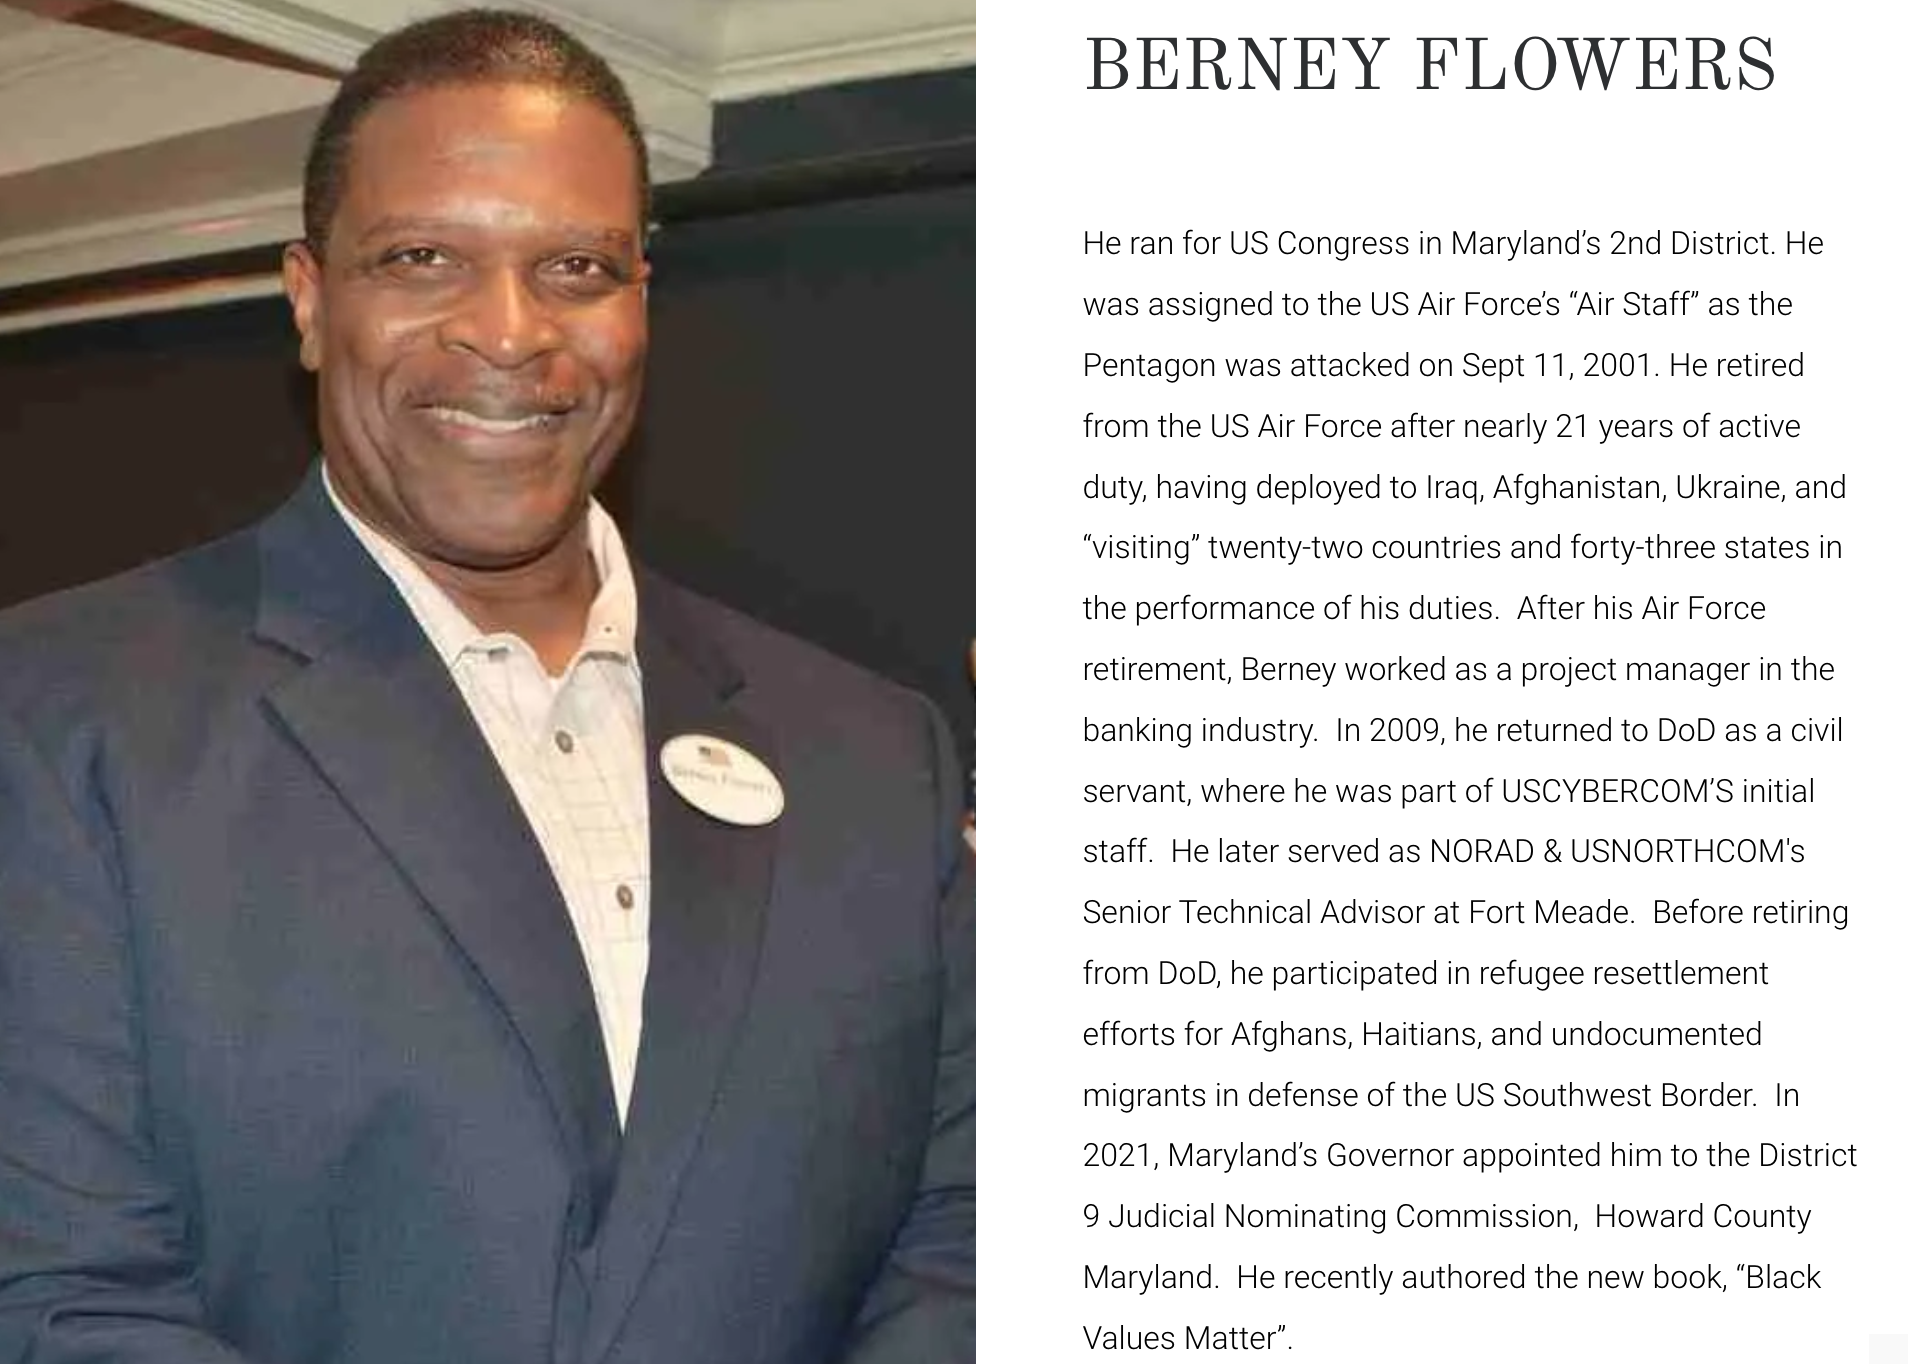 Speaker: Berney Flowers